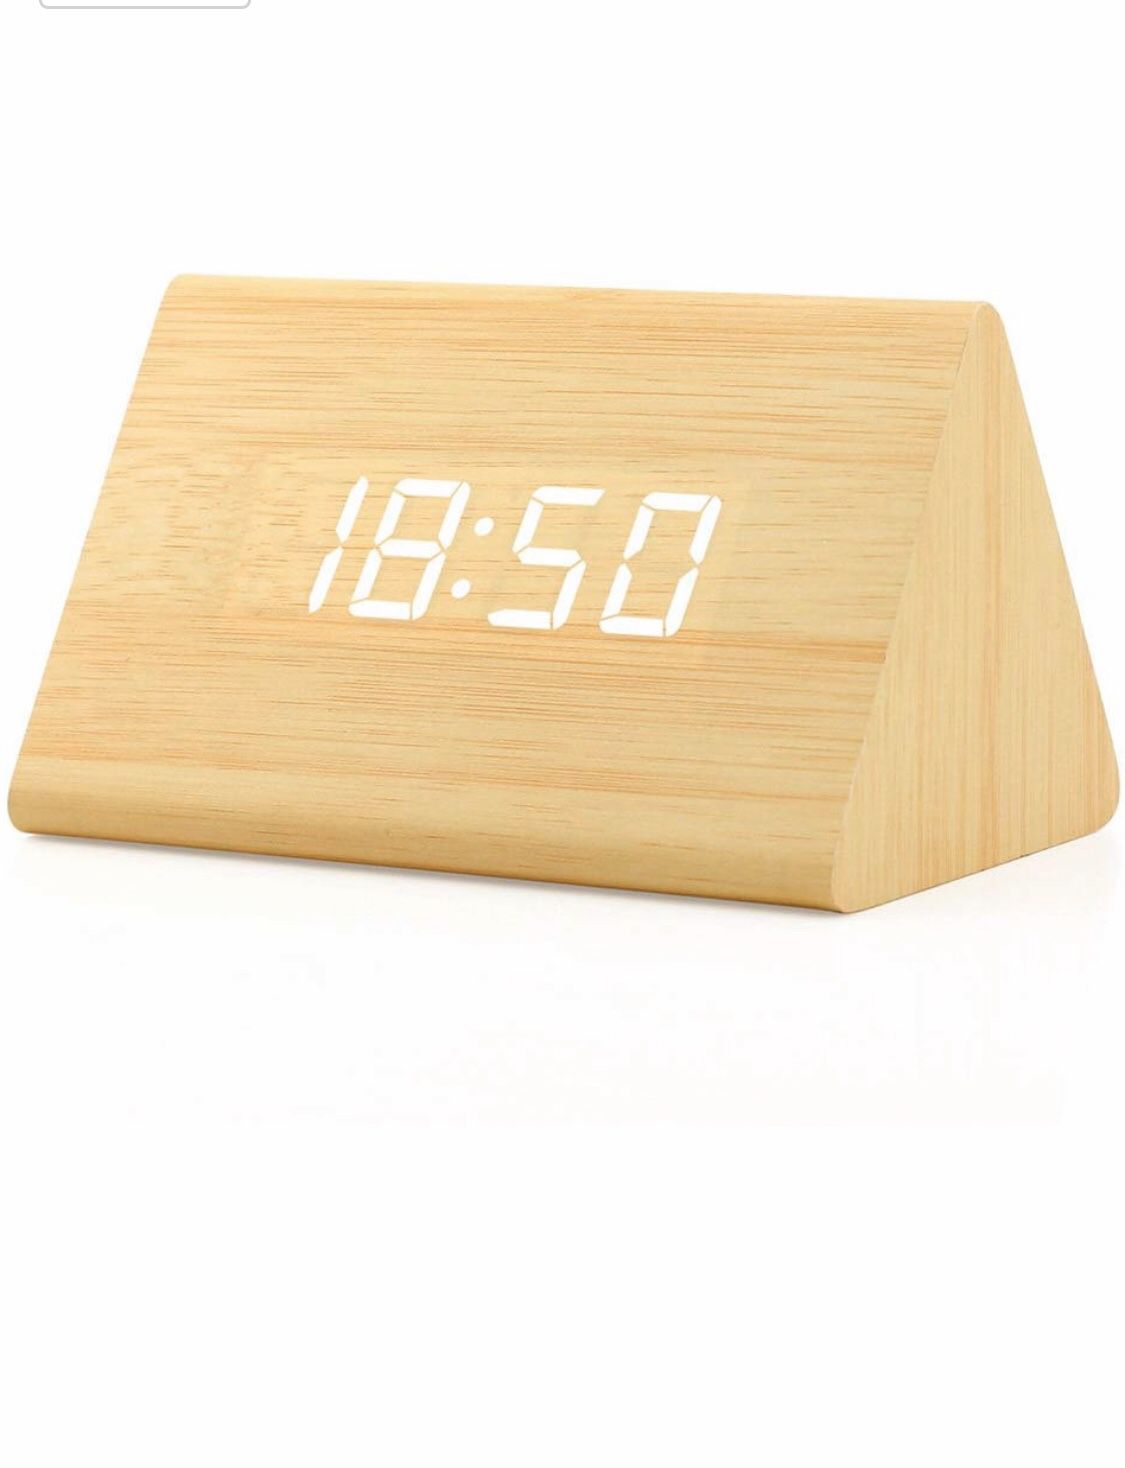 Wooden digital clock